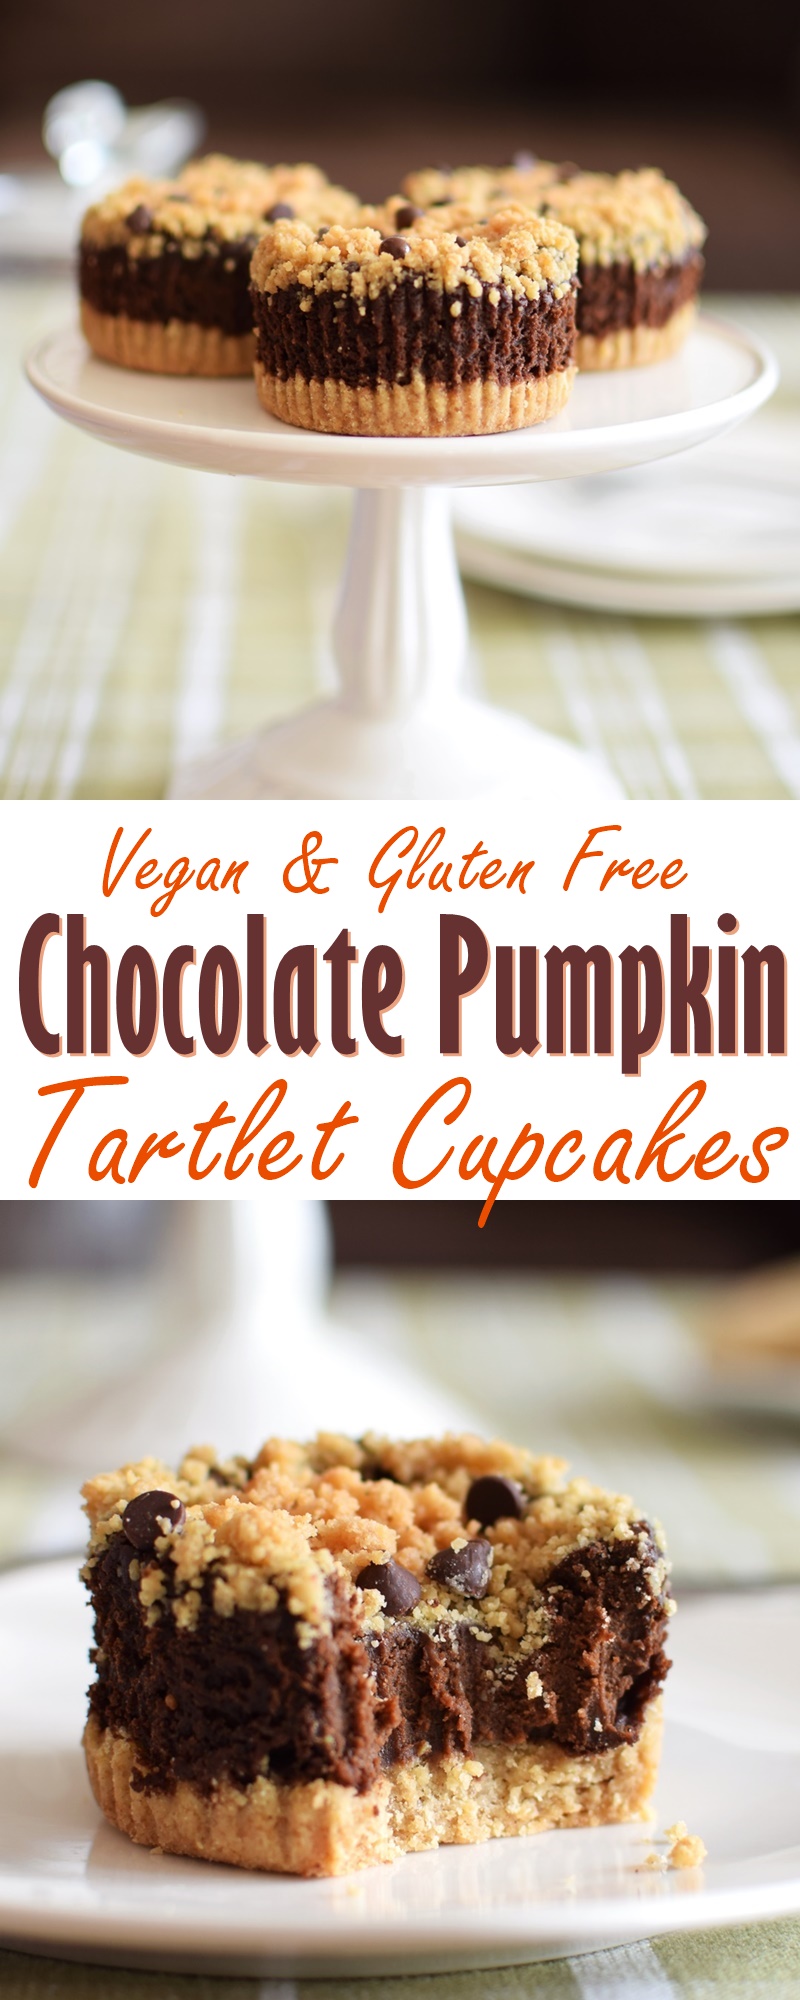 Chocolate Pumpkin Tartlet Cupcakes Recipe (vegan, gluten-free, dairy-free, nut-free and soy-free!)